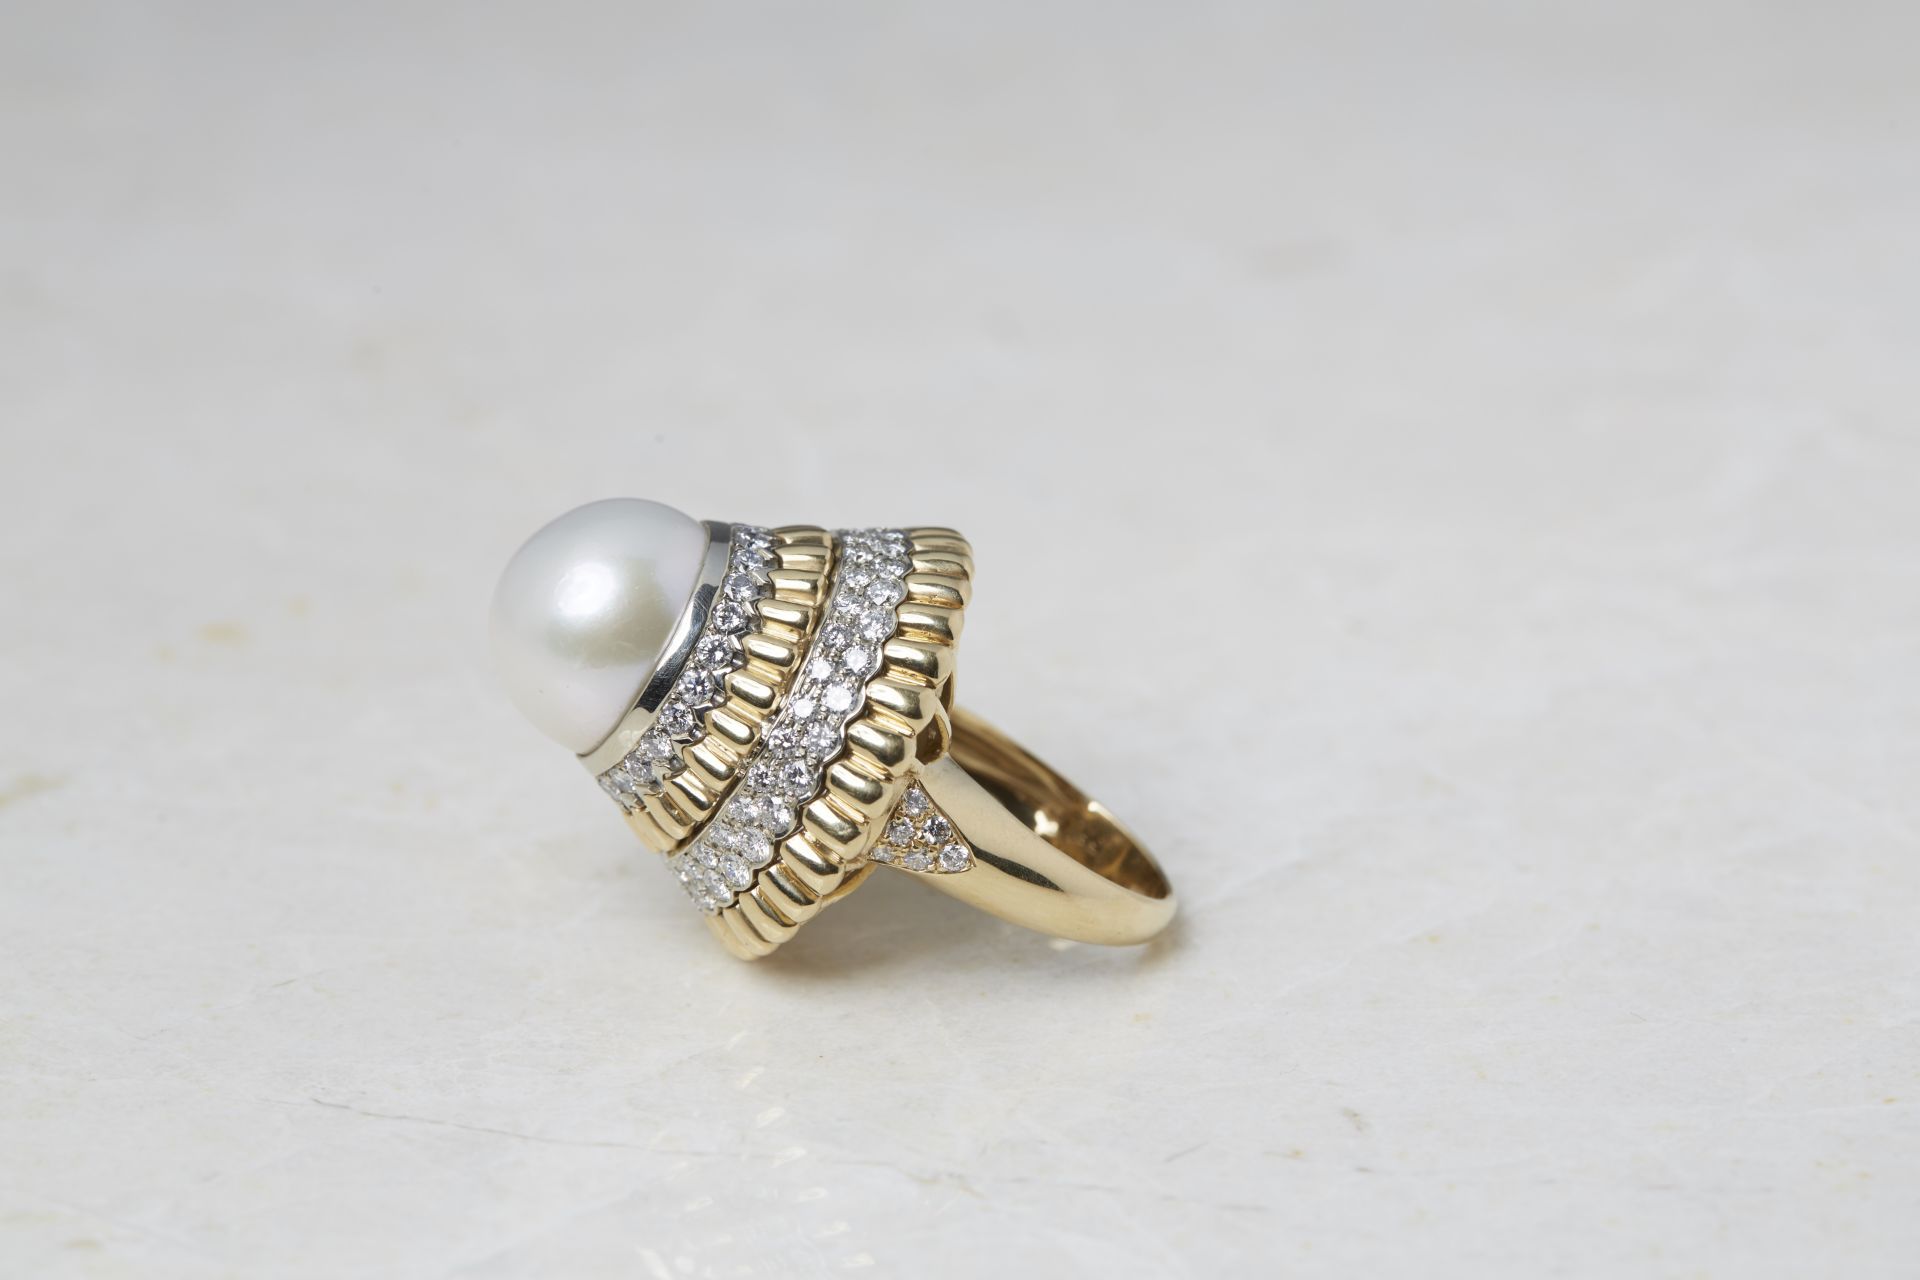 Van Cleef & Arpels 18k Yellow Gold Pearl & Diamond Ring - Image 17 of 28